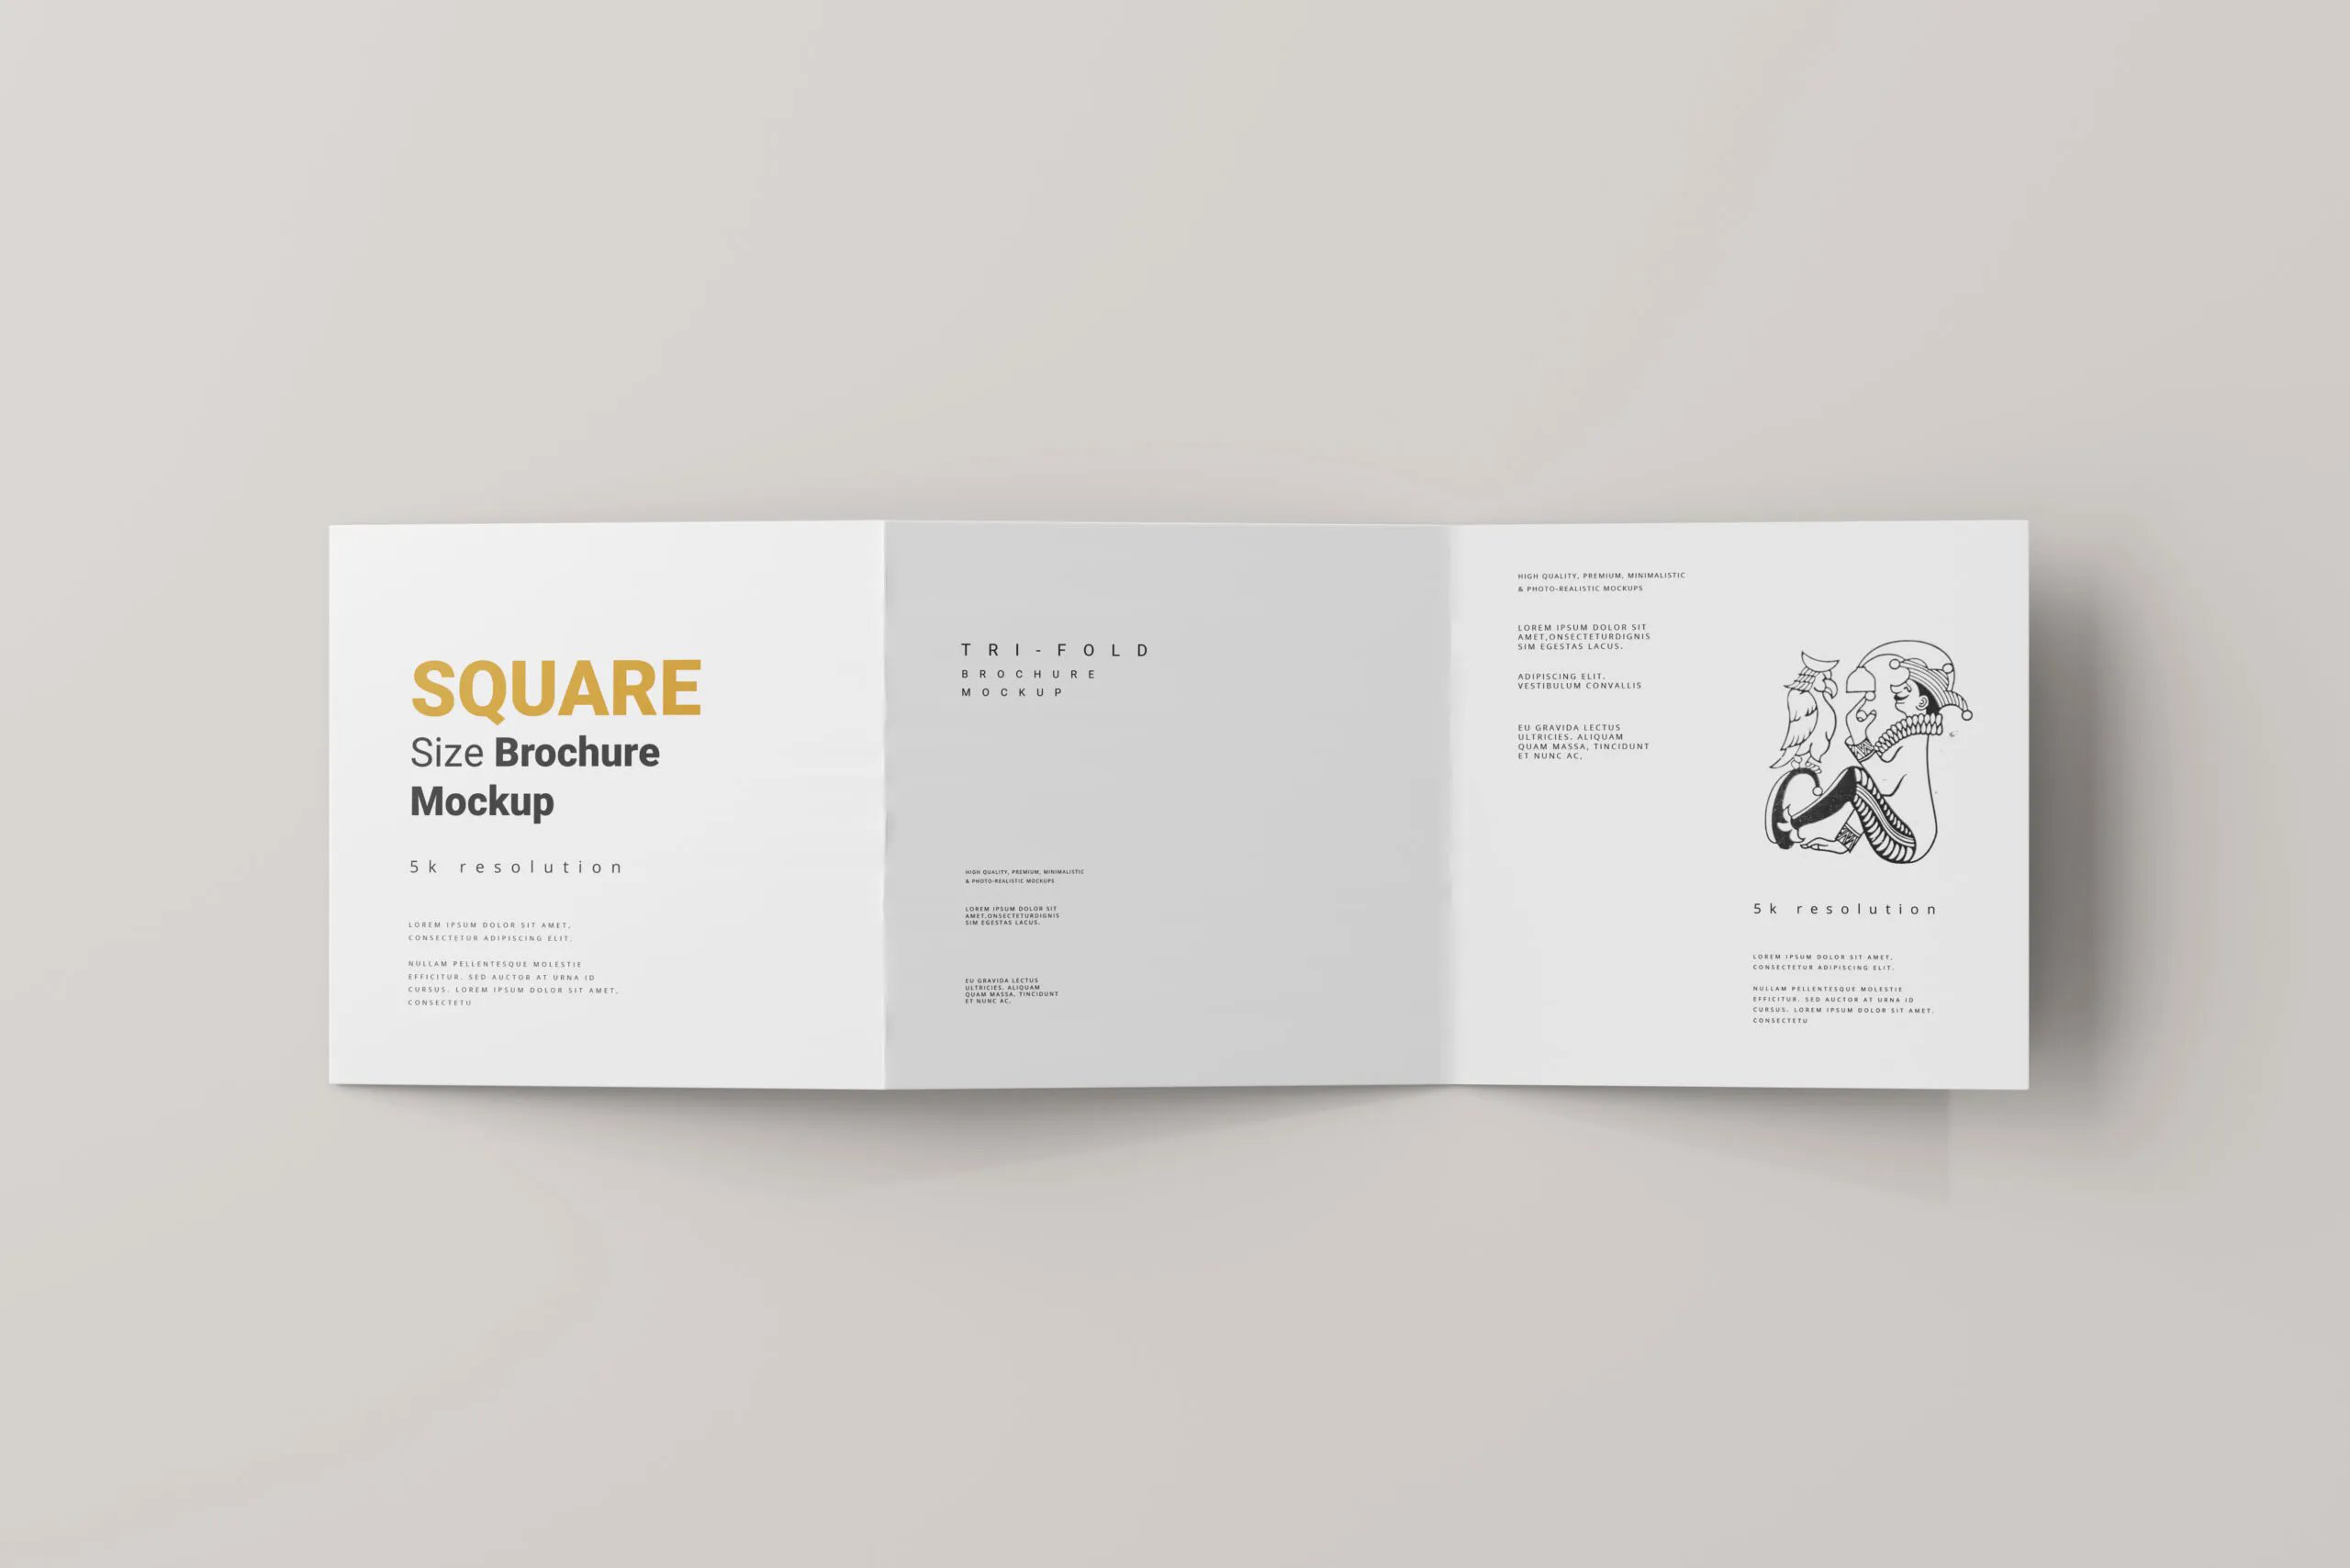 5 Tri Fold Square Brochure Mockups in Varied Sights FREE PSD